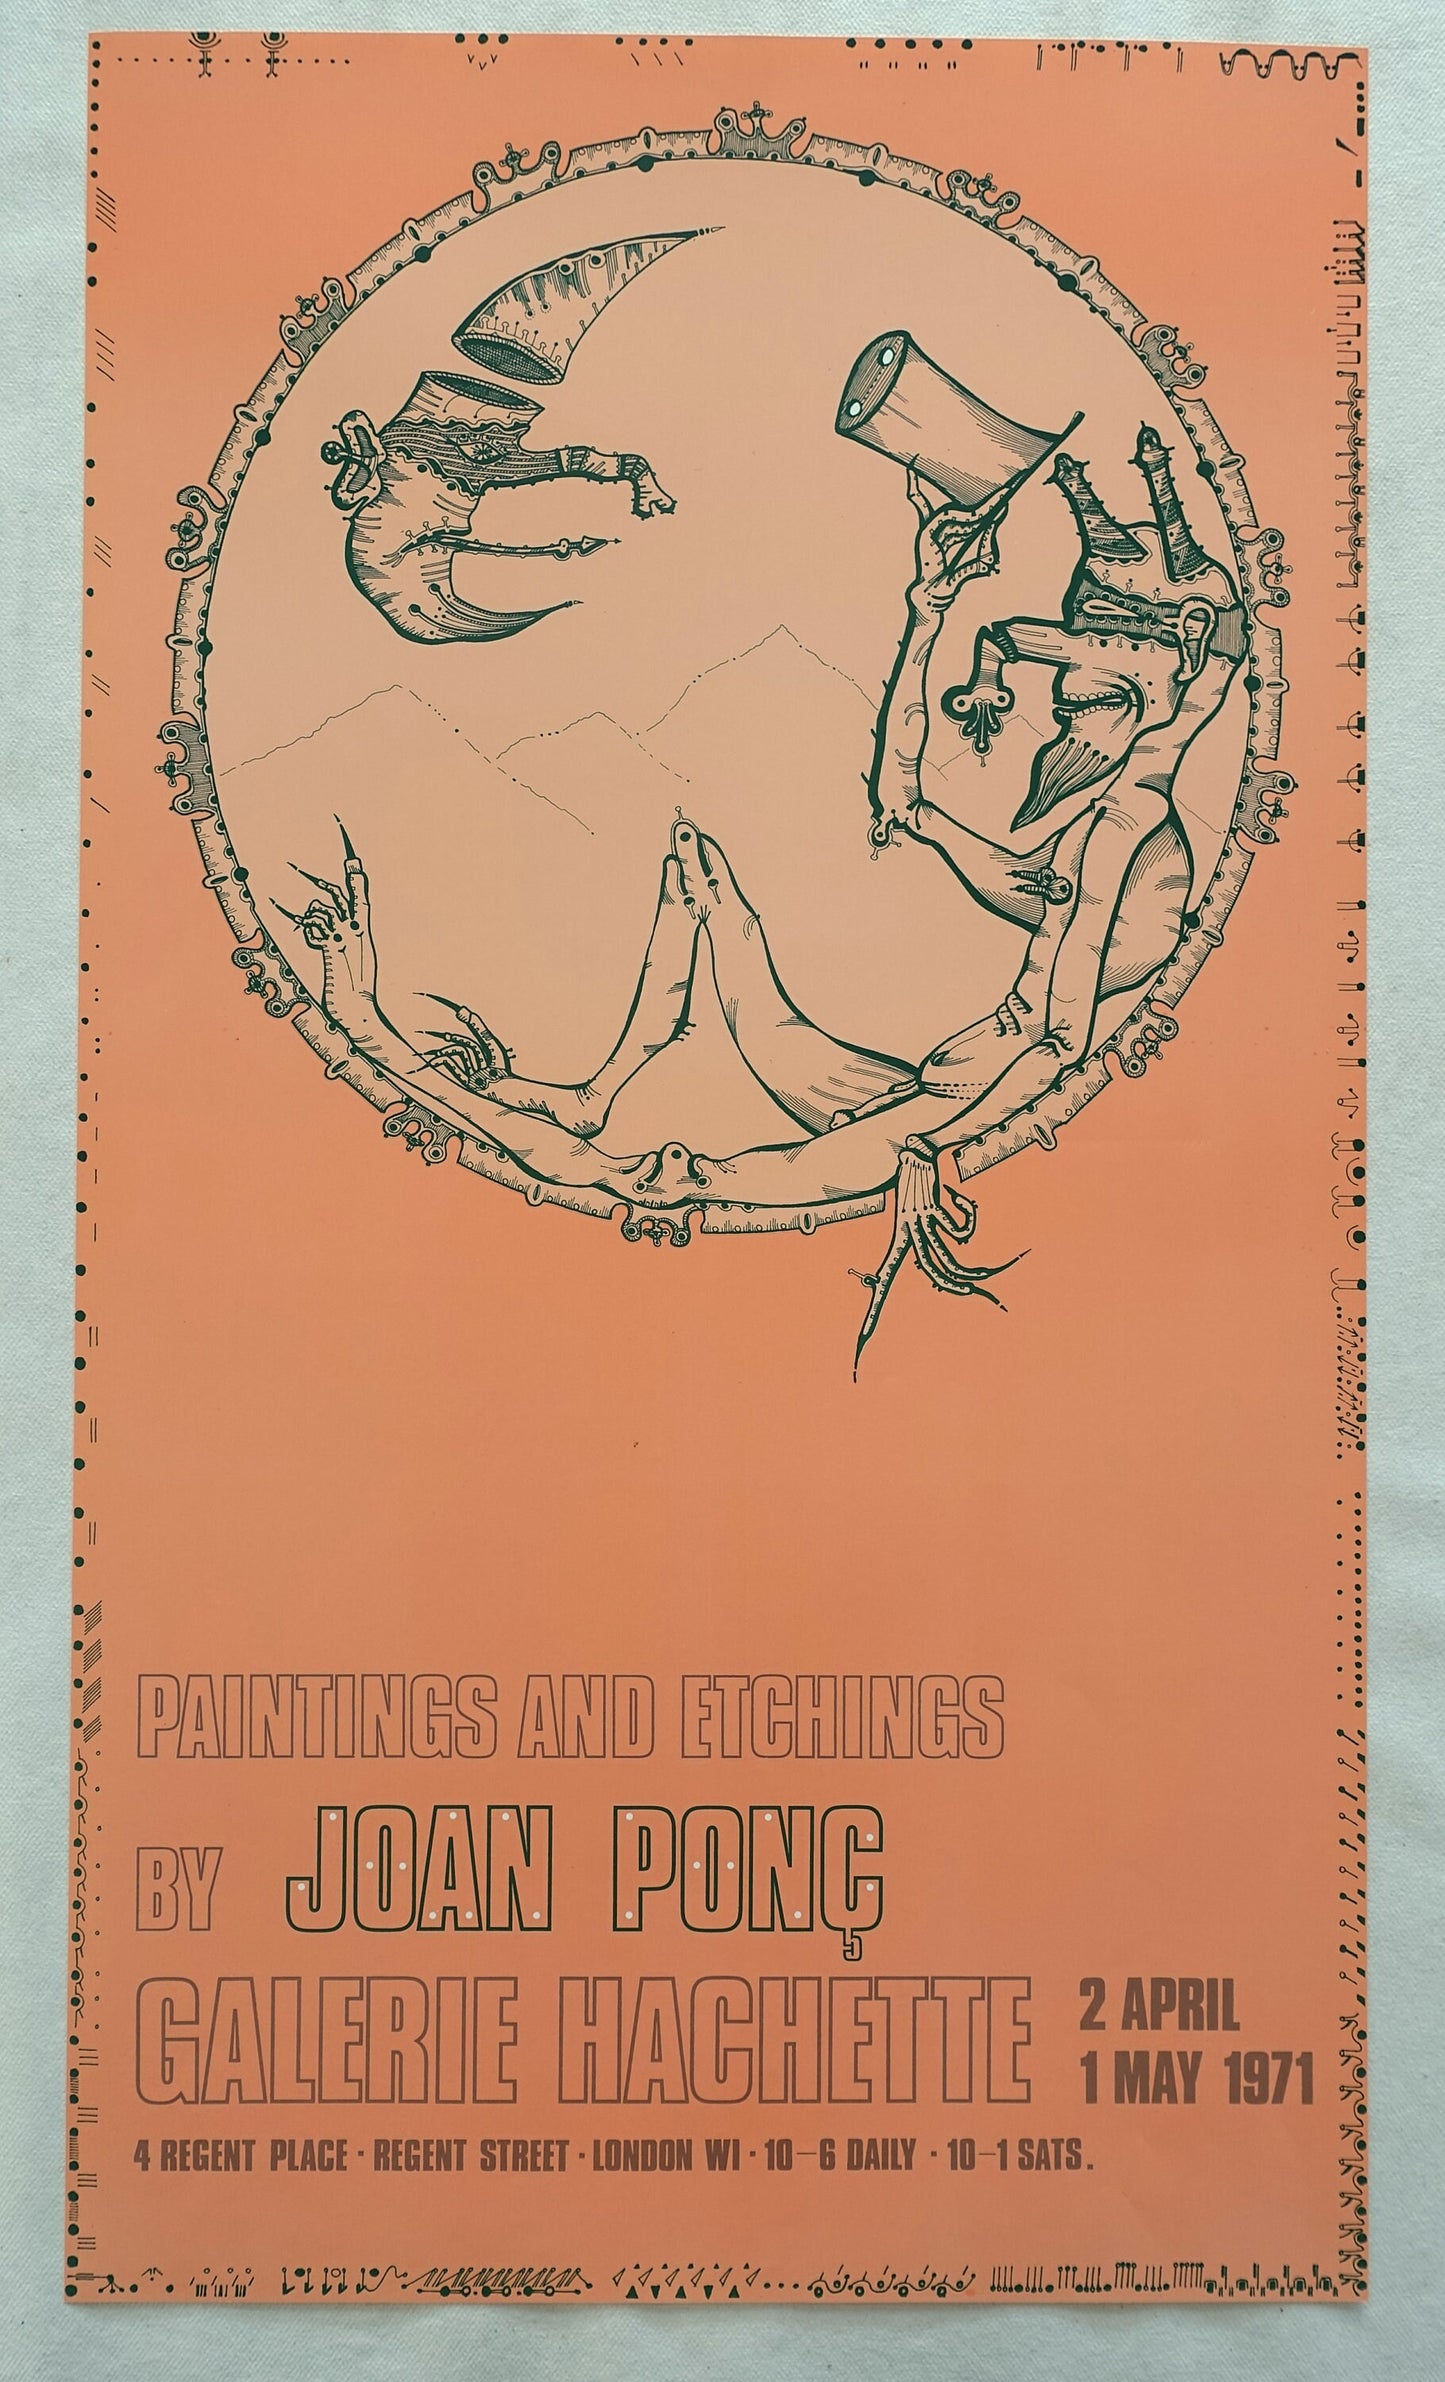 1971 Joan Ponc at Galerie Hachette Art Exhibition Poster - Original Vintage Poster